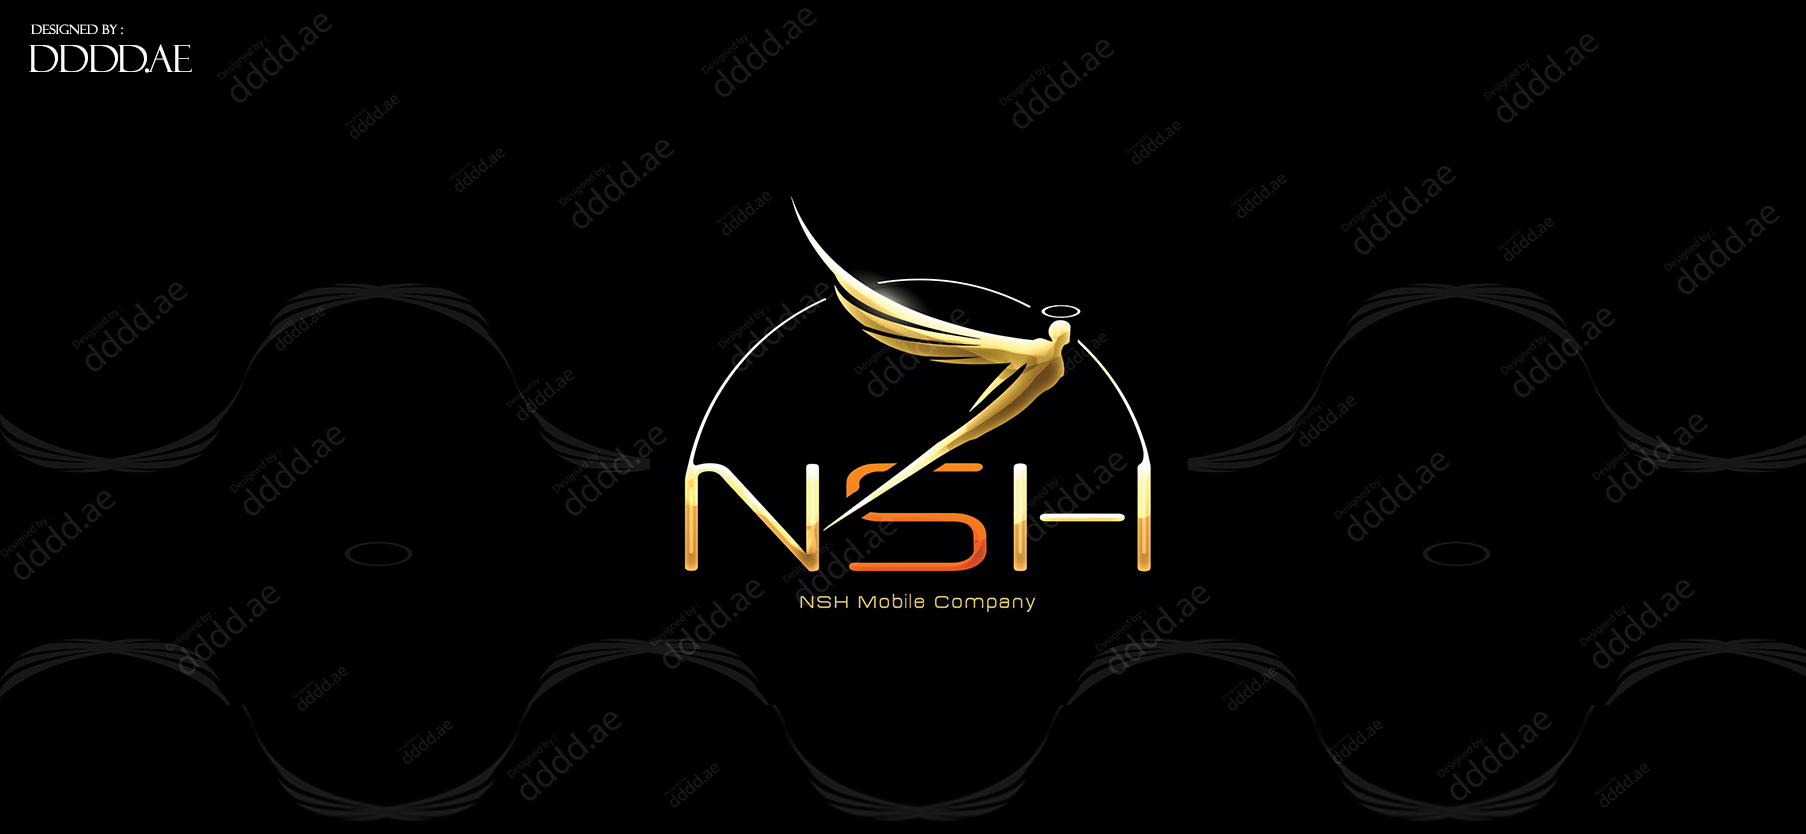 NSH mobile company